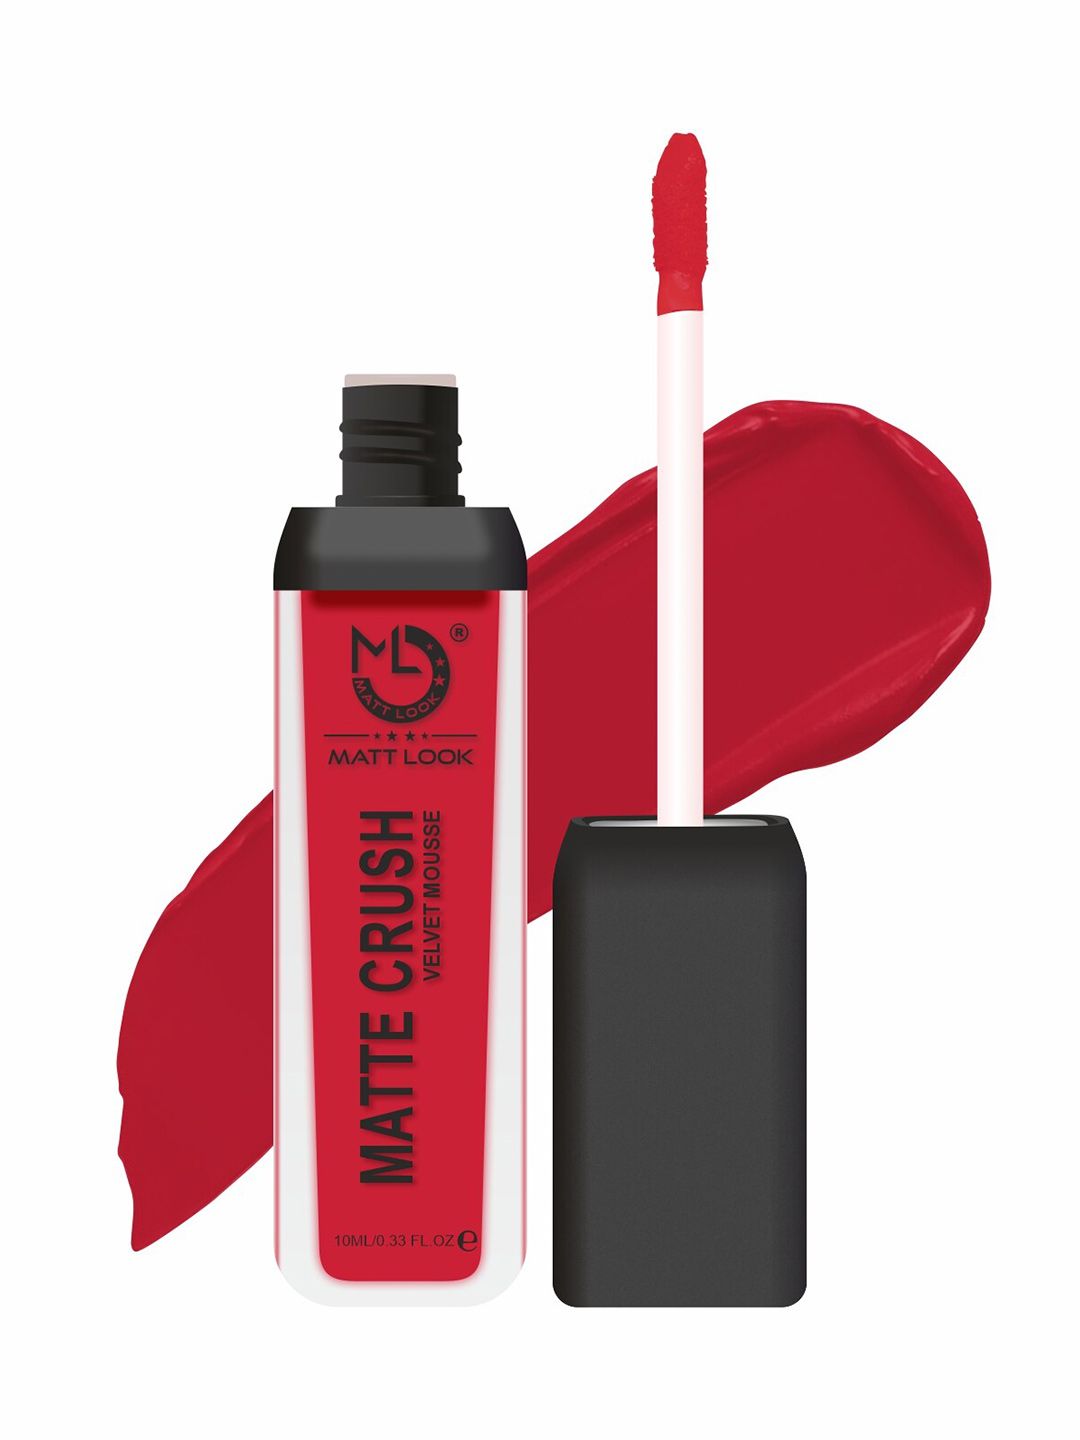 MATTLOOK Matte Crush Velvet Mousse Lipstick - Hot Red (Pack of 2) Price in India